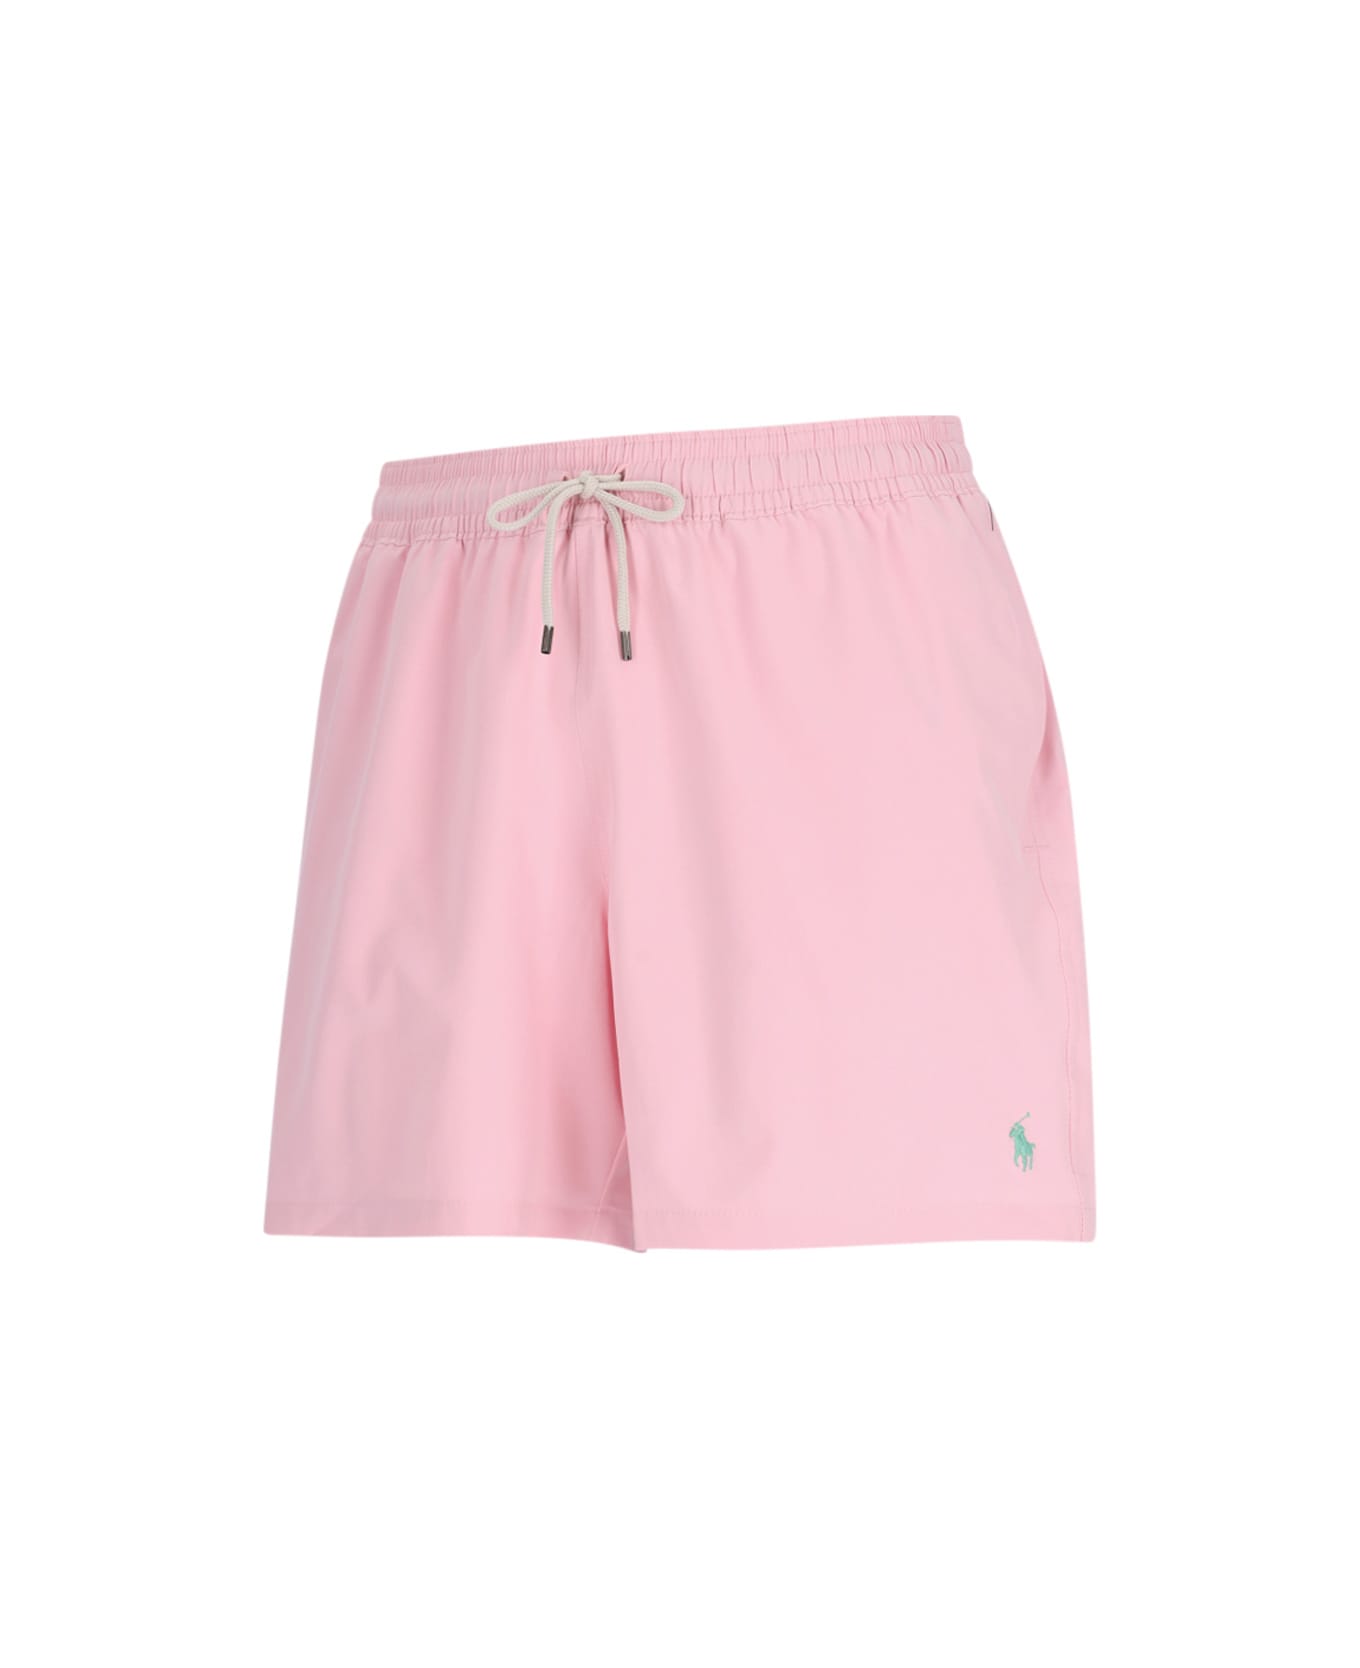 Polo Ralph Lauren 'traveler' Swim Shorts - Garden pink